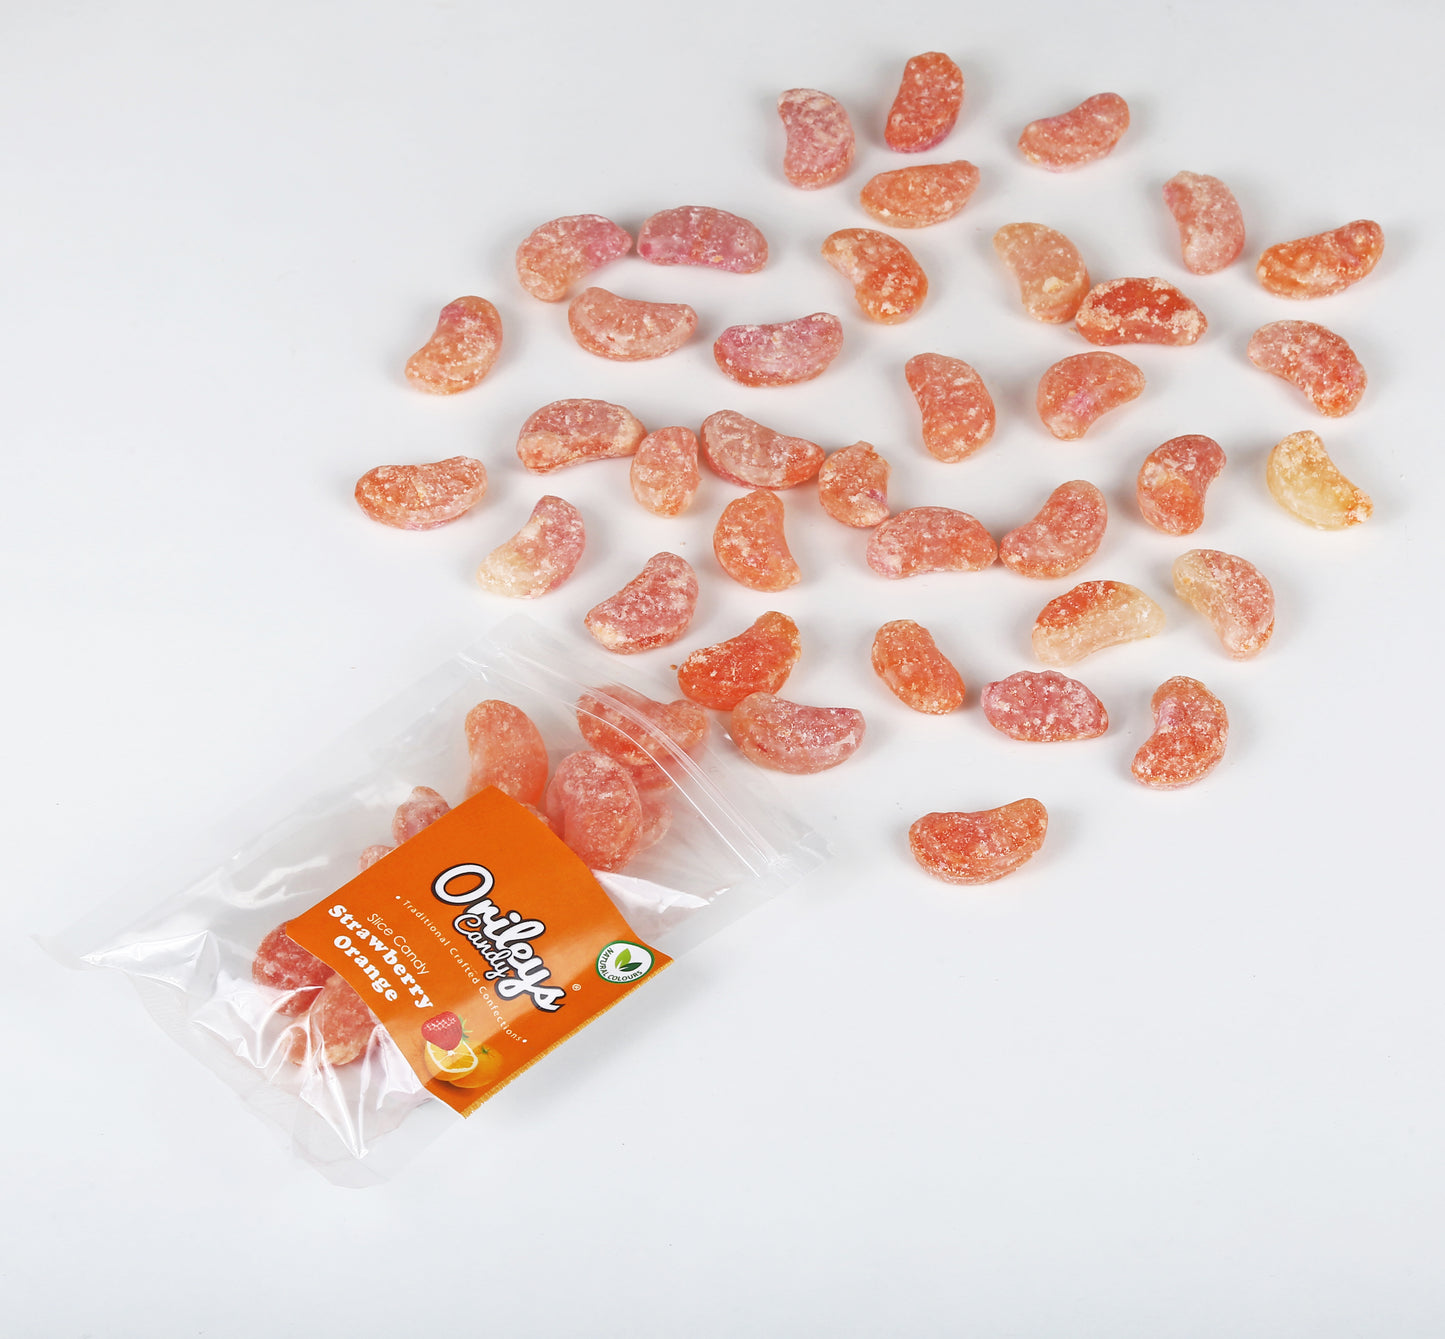 Strawberry Orange | Pack of 6 | Hard Candy | Orileys